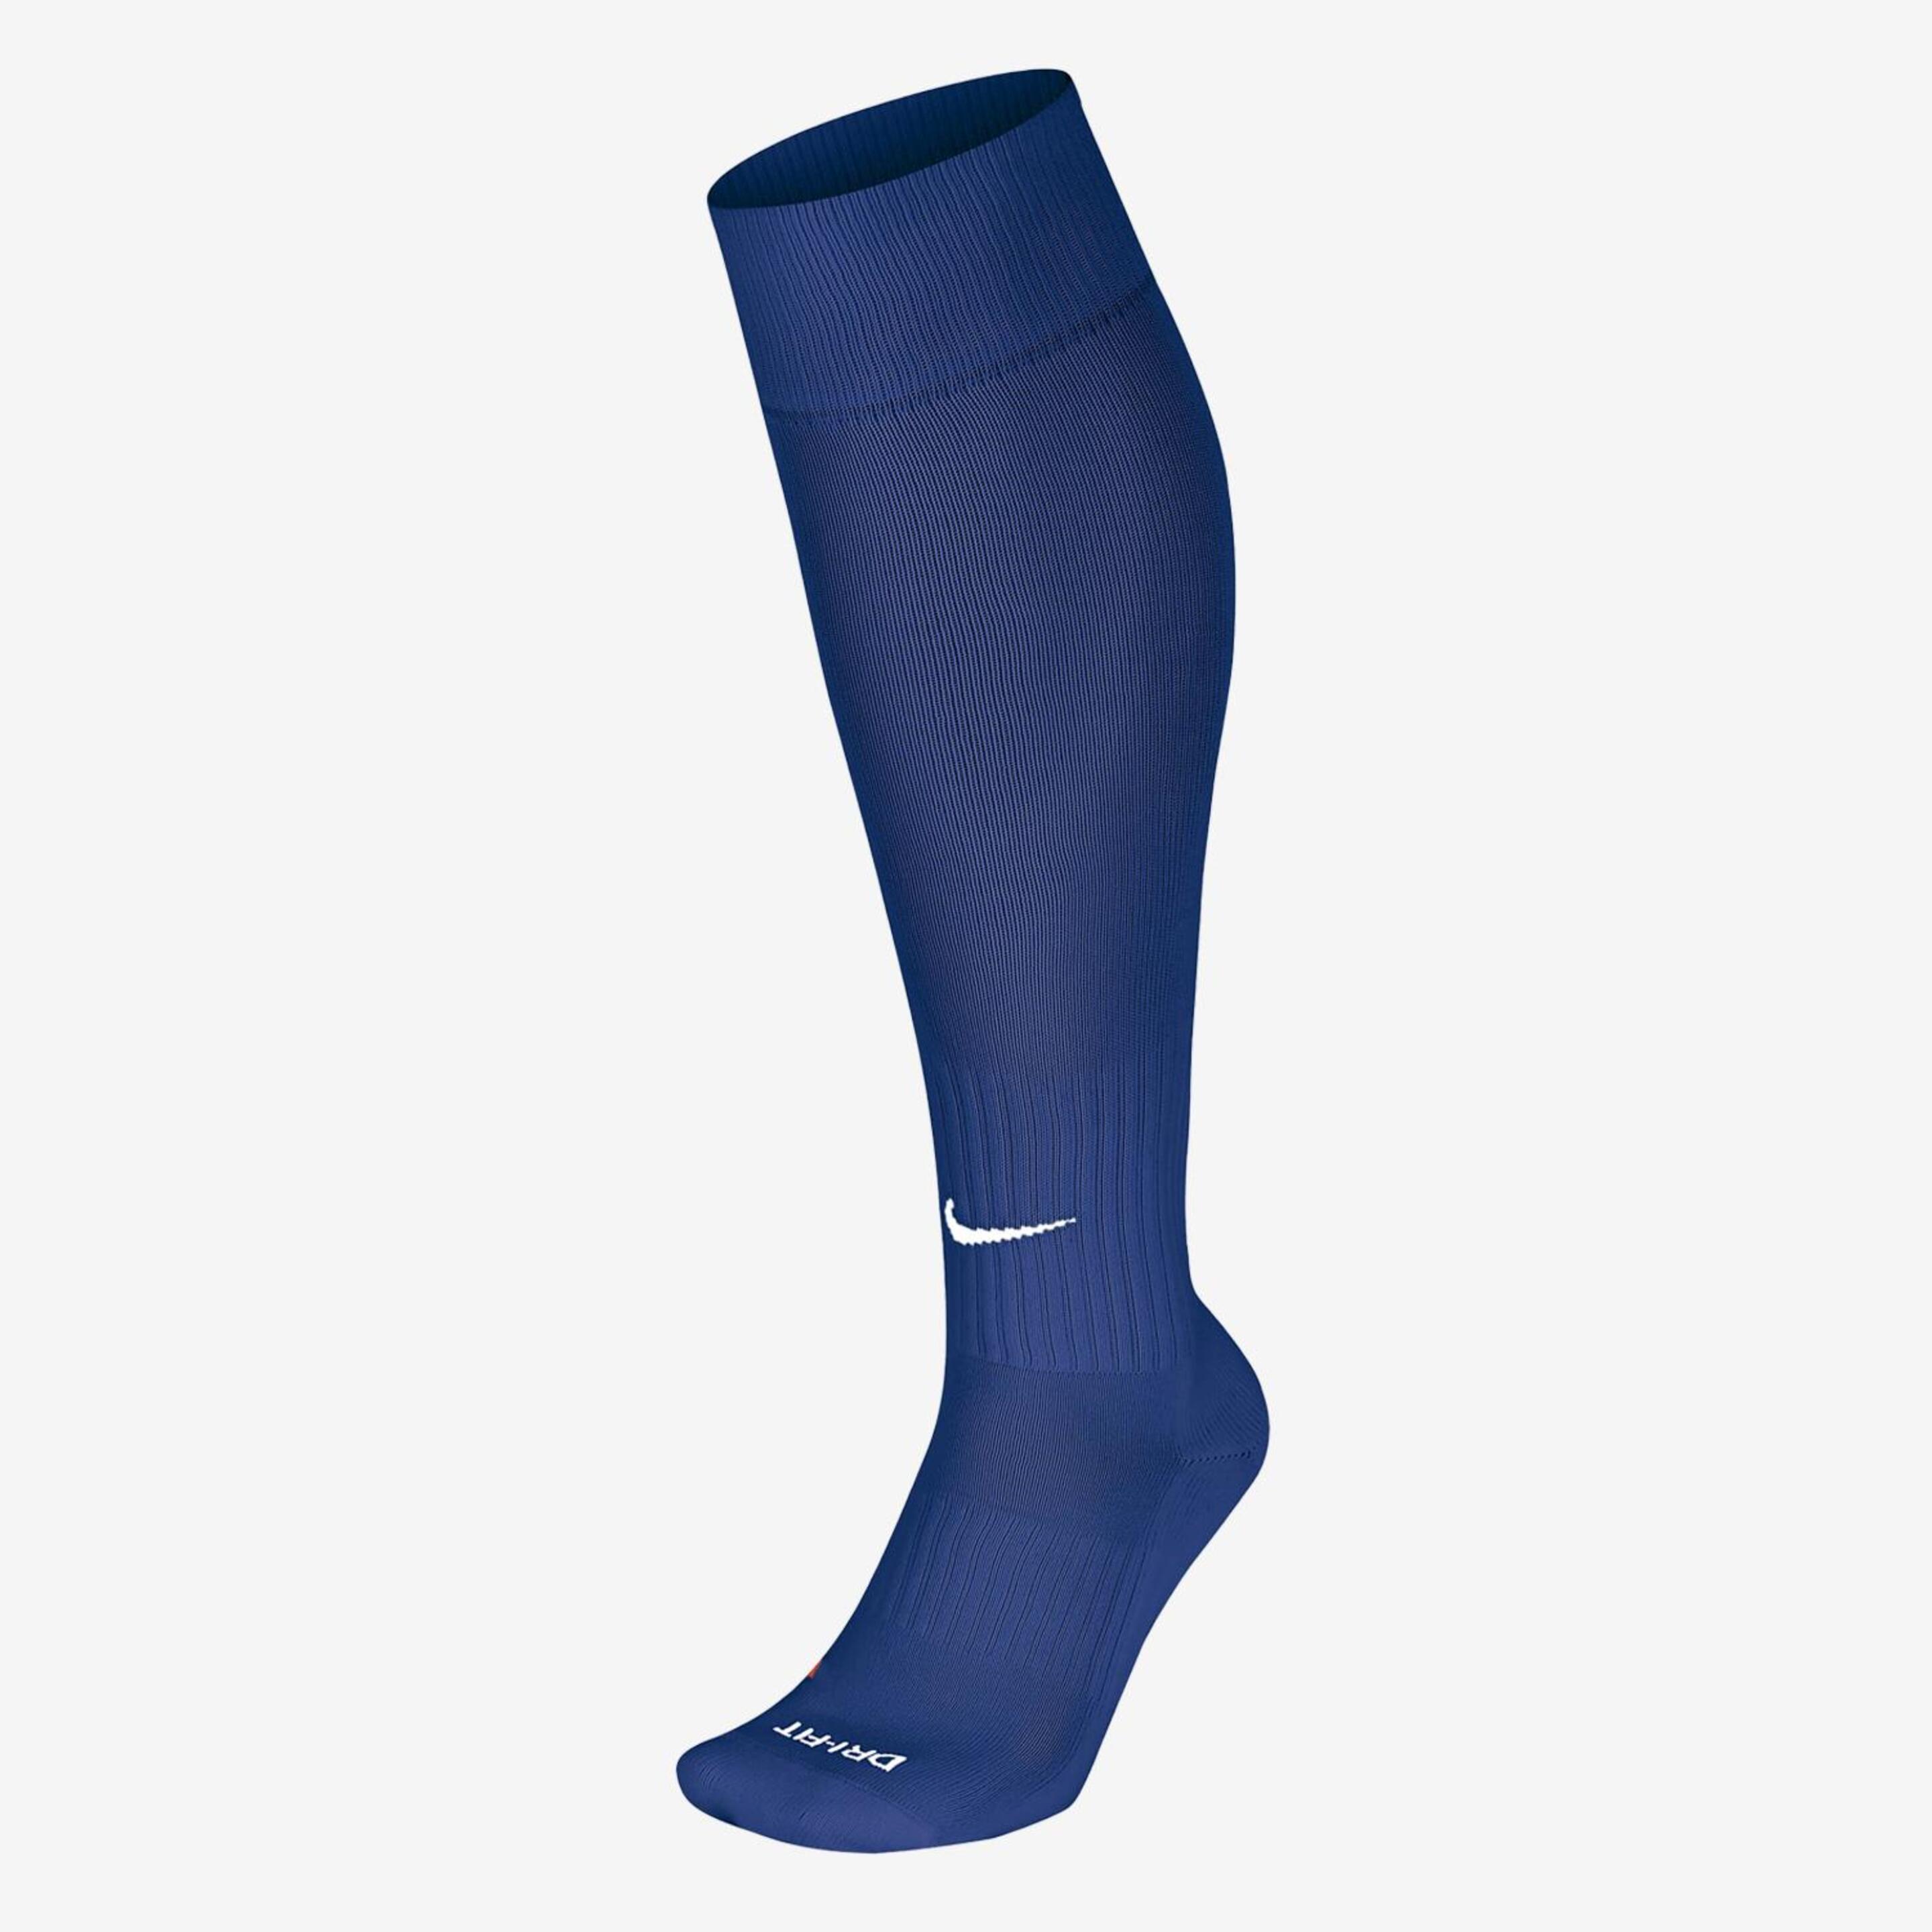 Nike Acdmy - azul - Meias Futebol